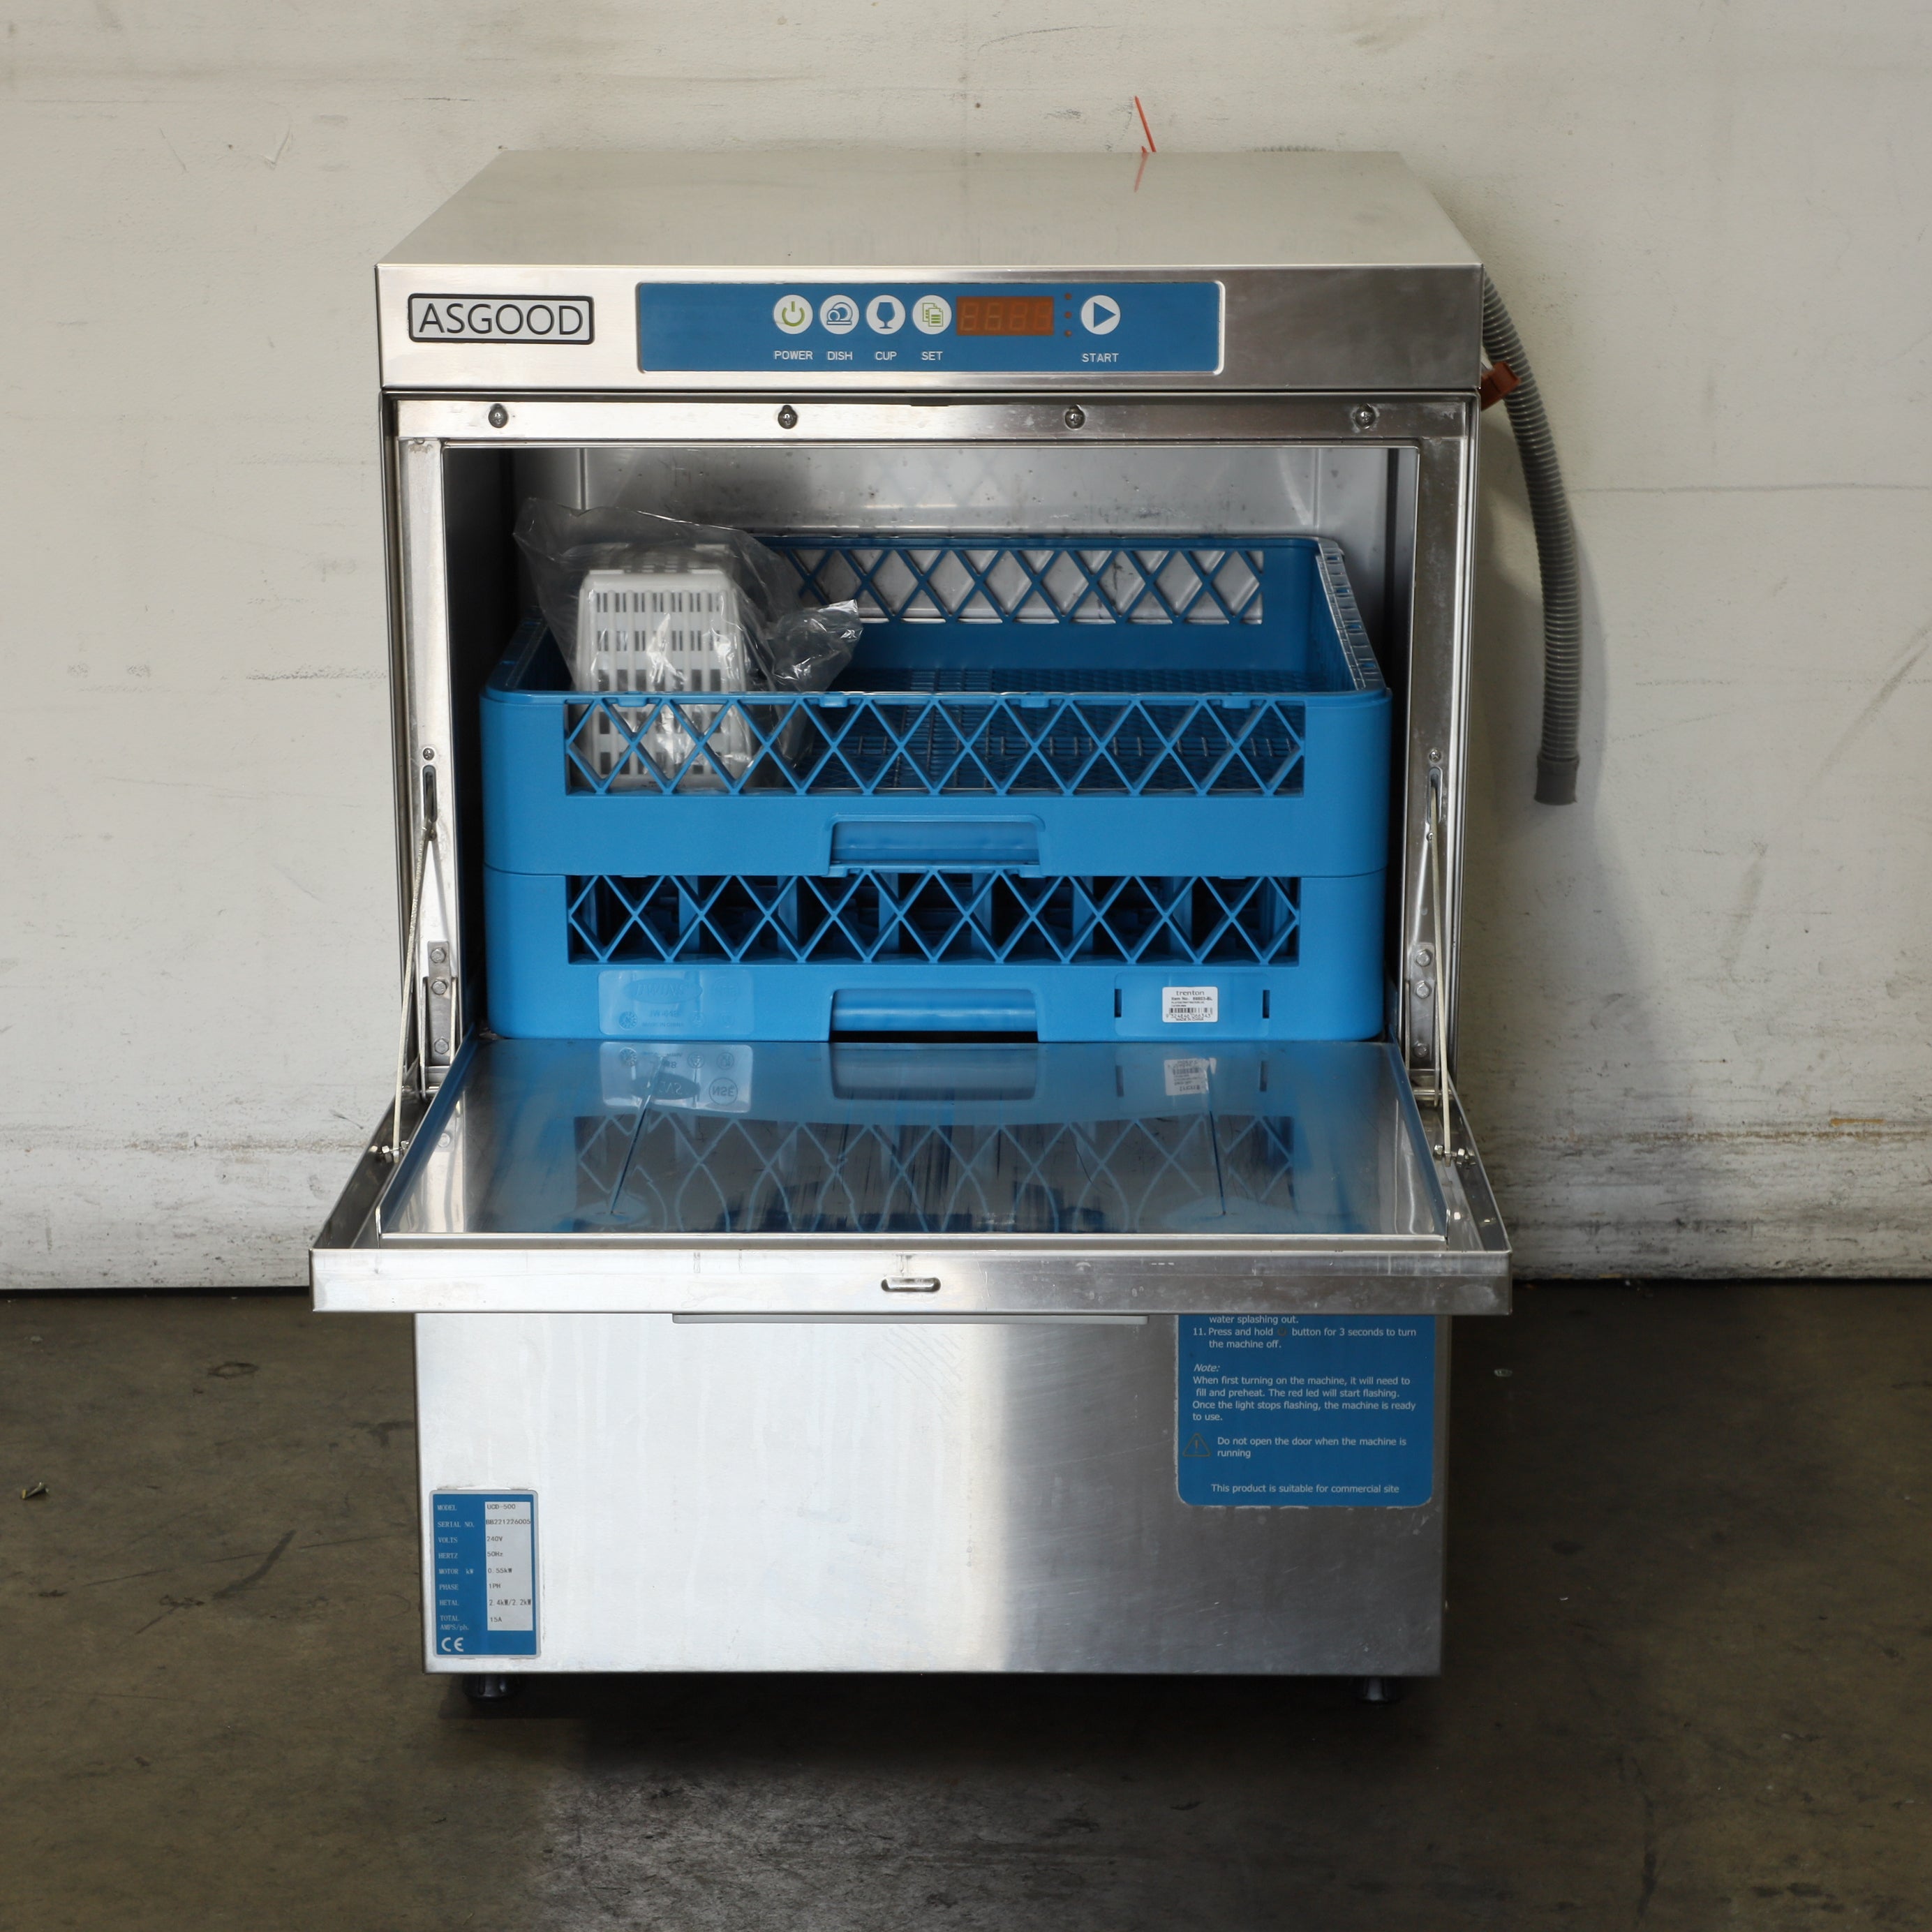 Thumbnail - As Good UCD-500 Undercounter Dishwasher